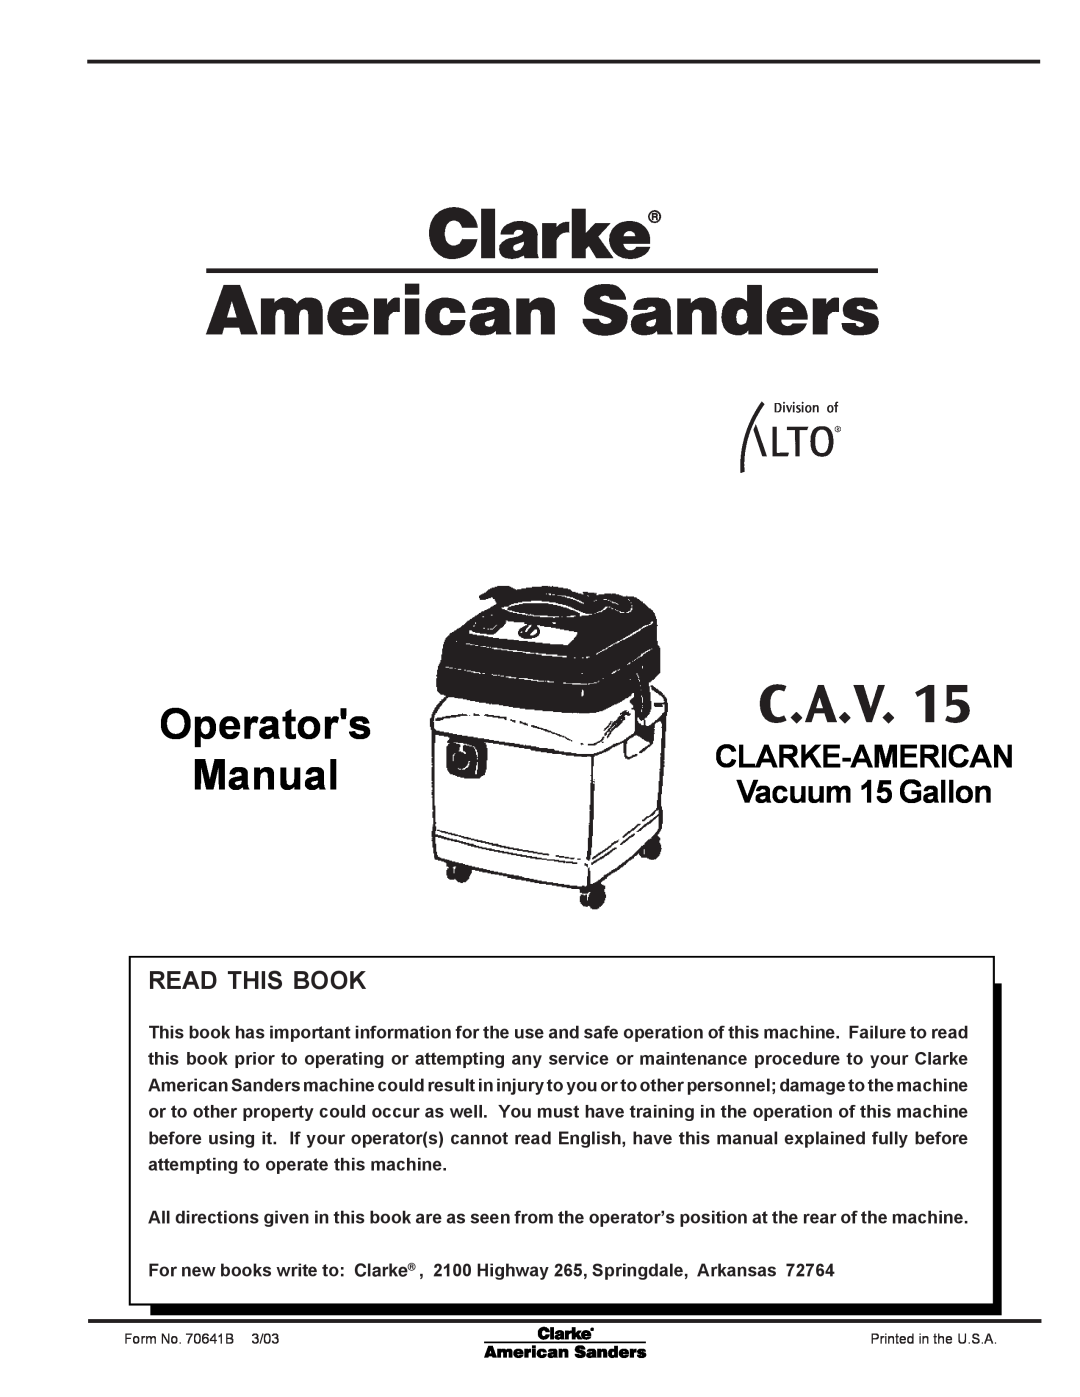 Nilfisk-ALTO C.A.V. 15 manual Operators, Manual, Read This Book, Clarke-American, Vacuum 15 Gallon 